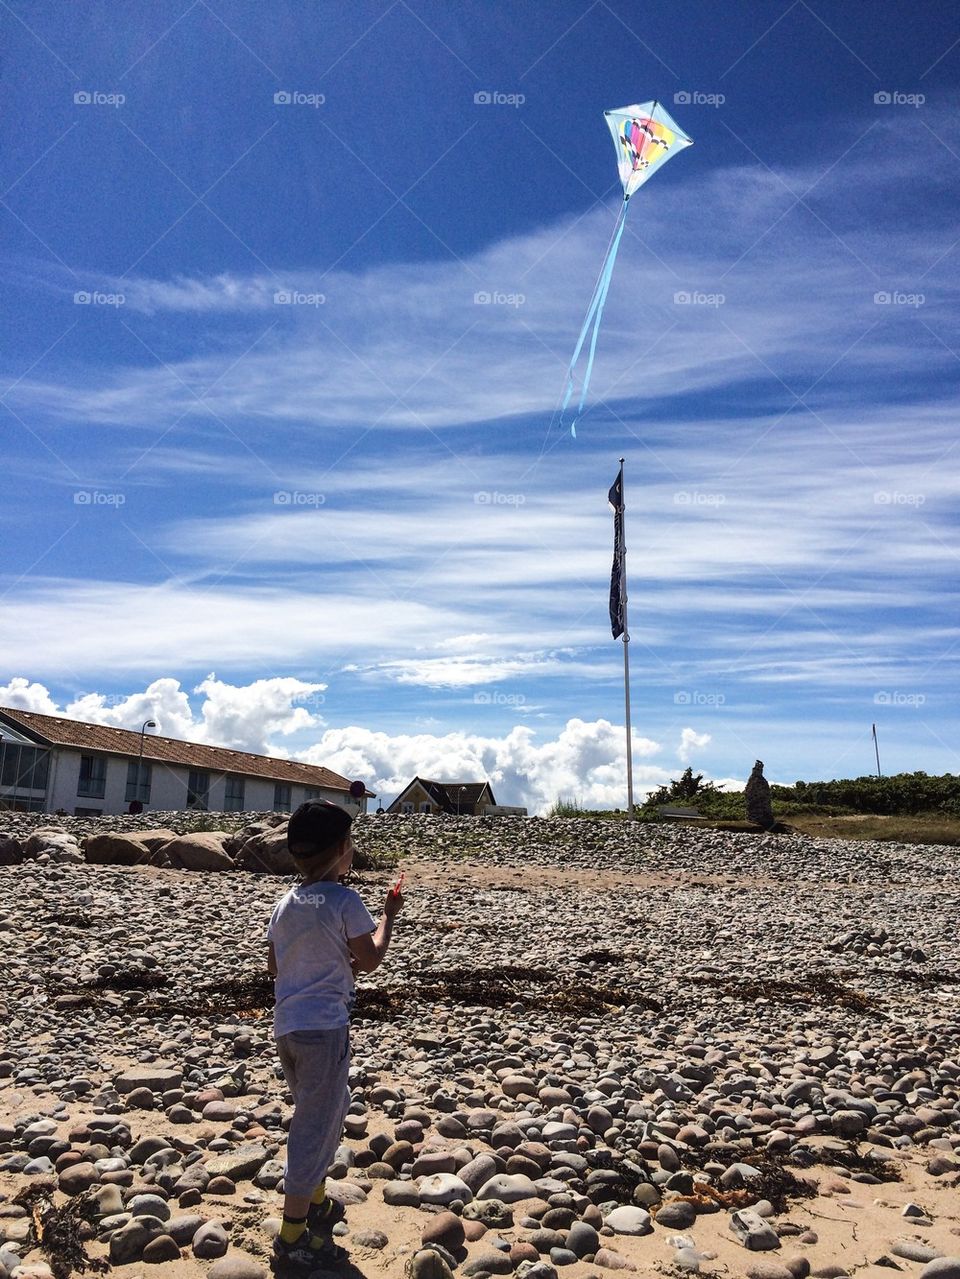 Boy with a kite